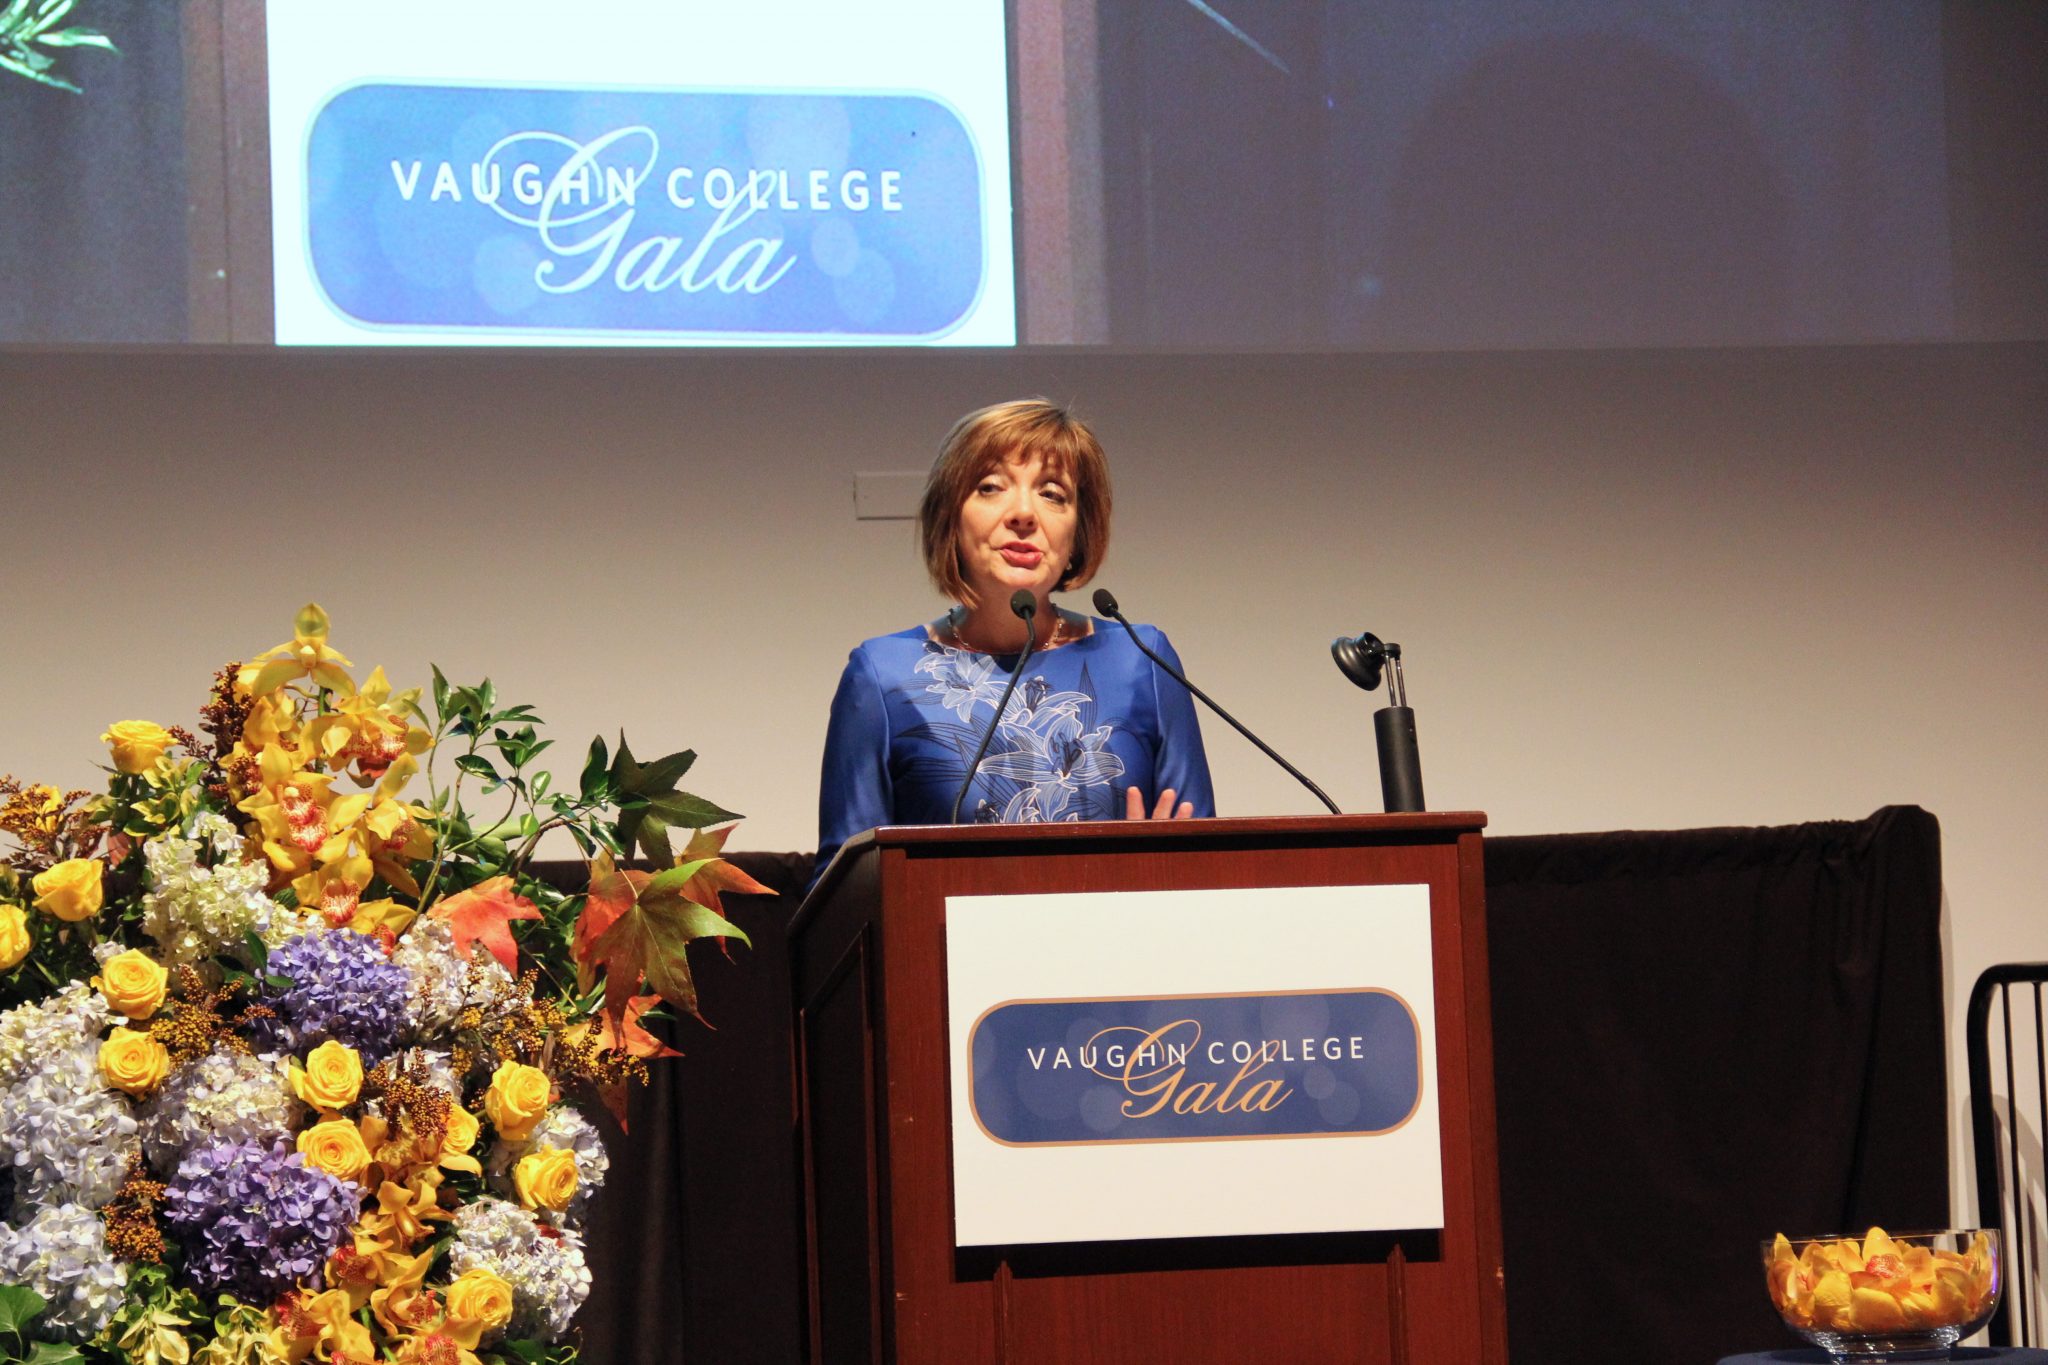 Vaughn College Gala Honors Mary Ellen S. Jones, Vice President of Asia-Pacific Sales at Pratt & Whitney